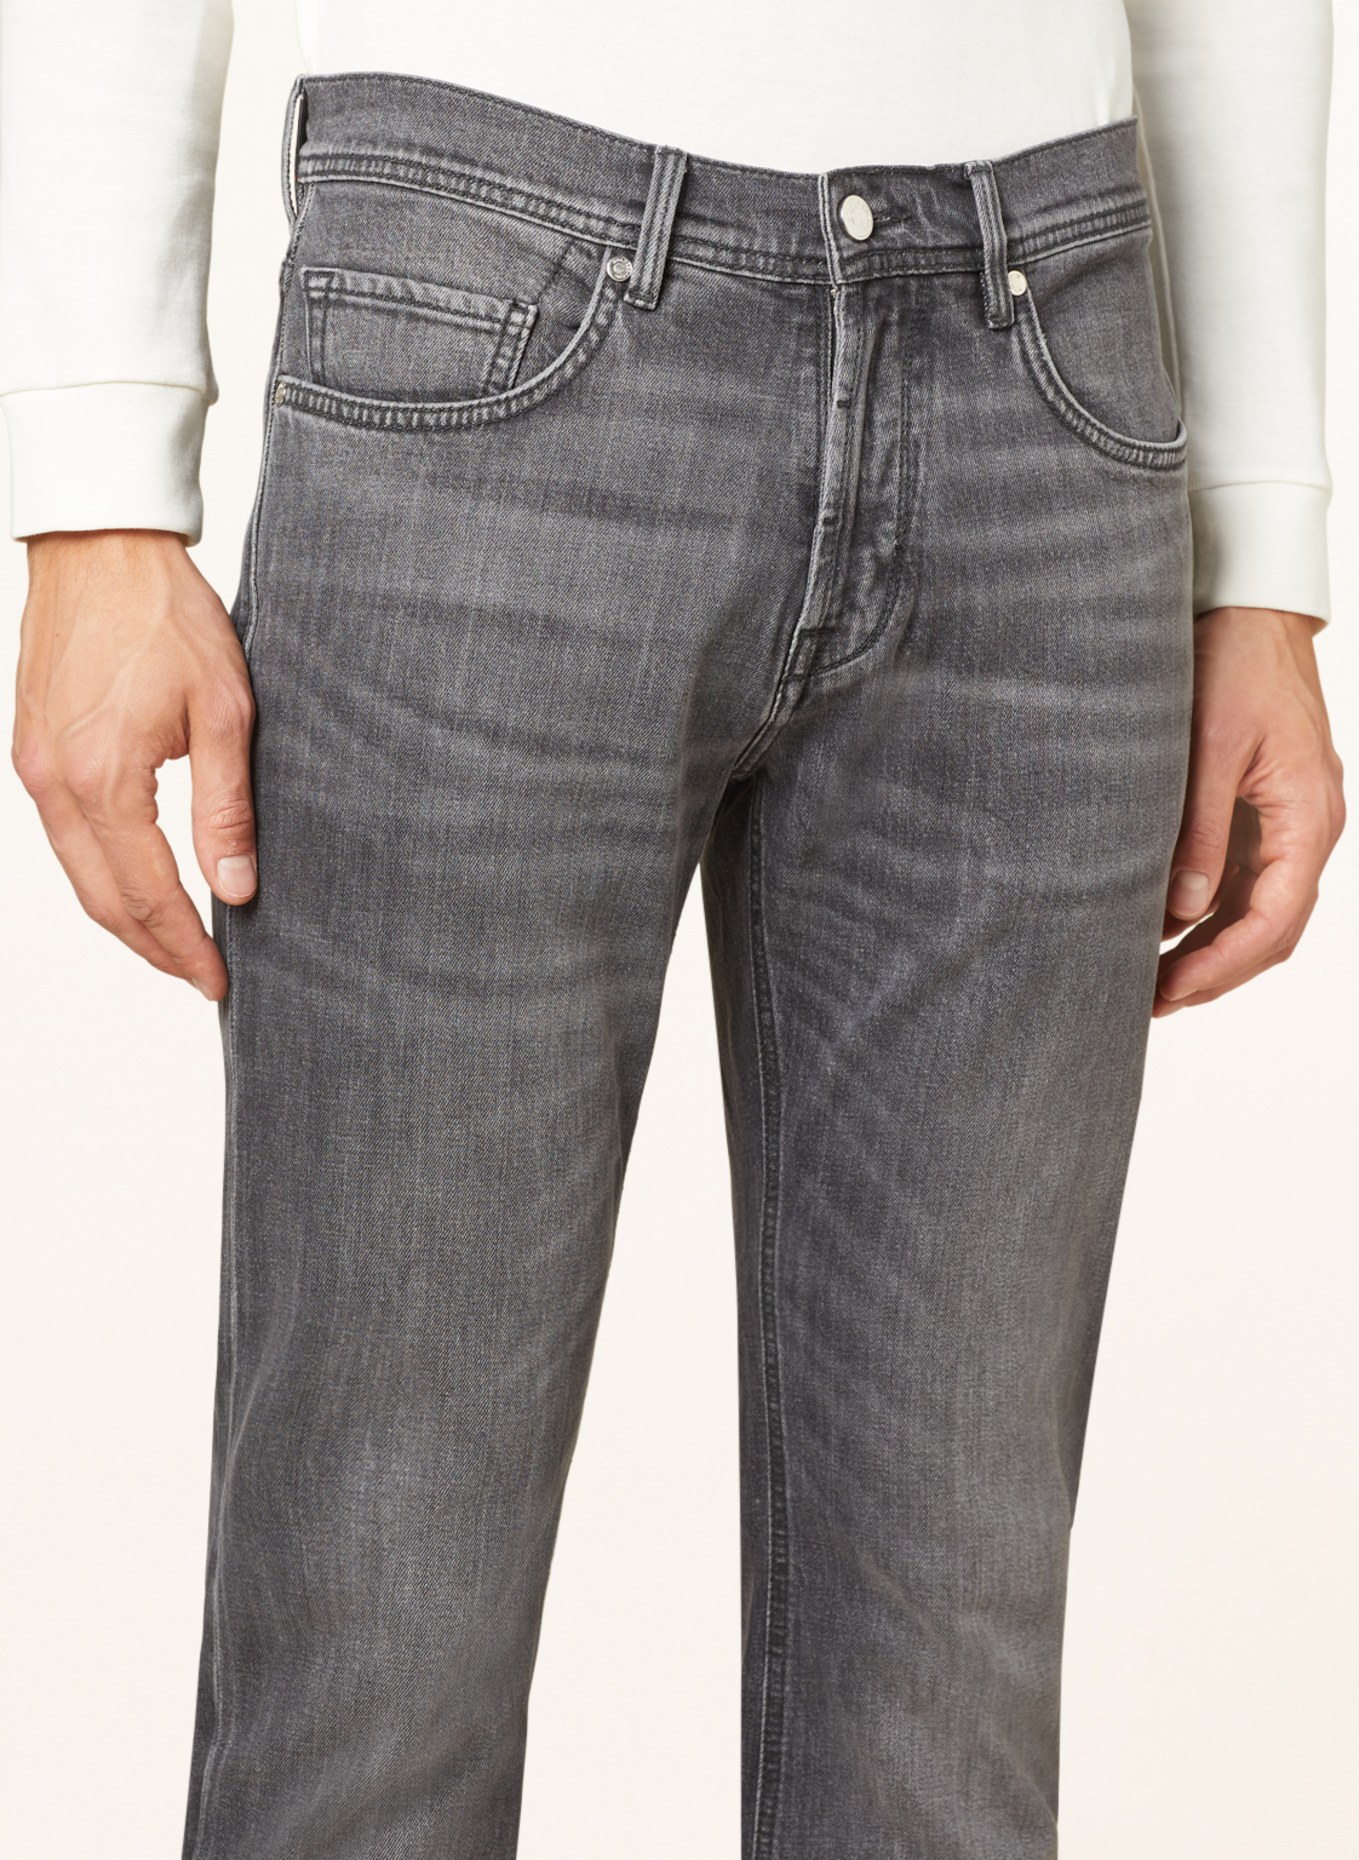 BALDESSARINI Jeans Regular Fit, Farbe: 9834 grey used buffies (Bild 5)